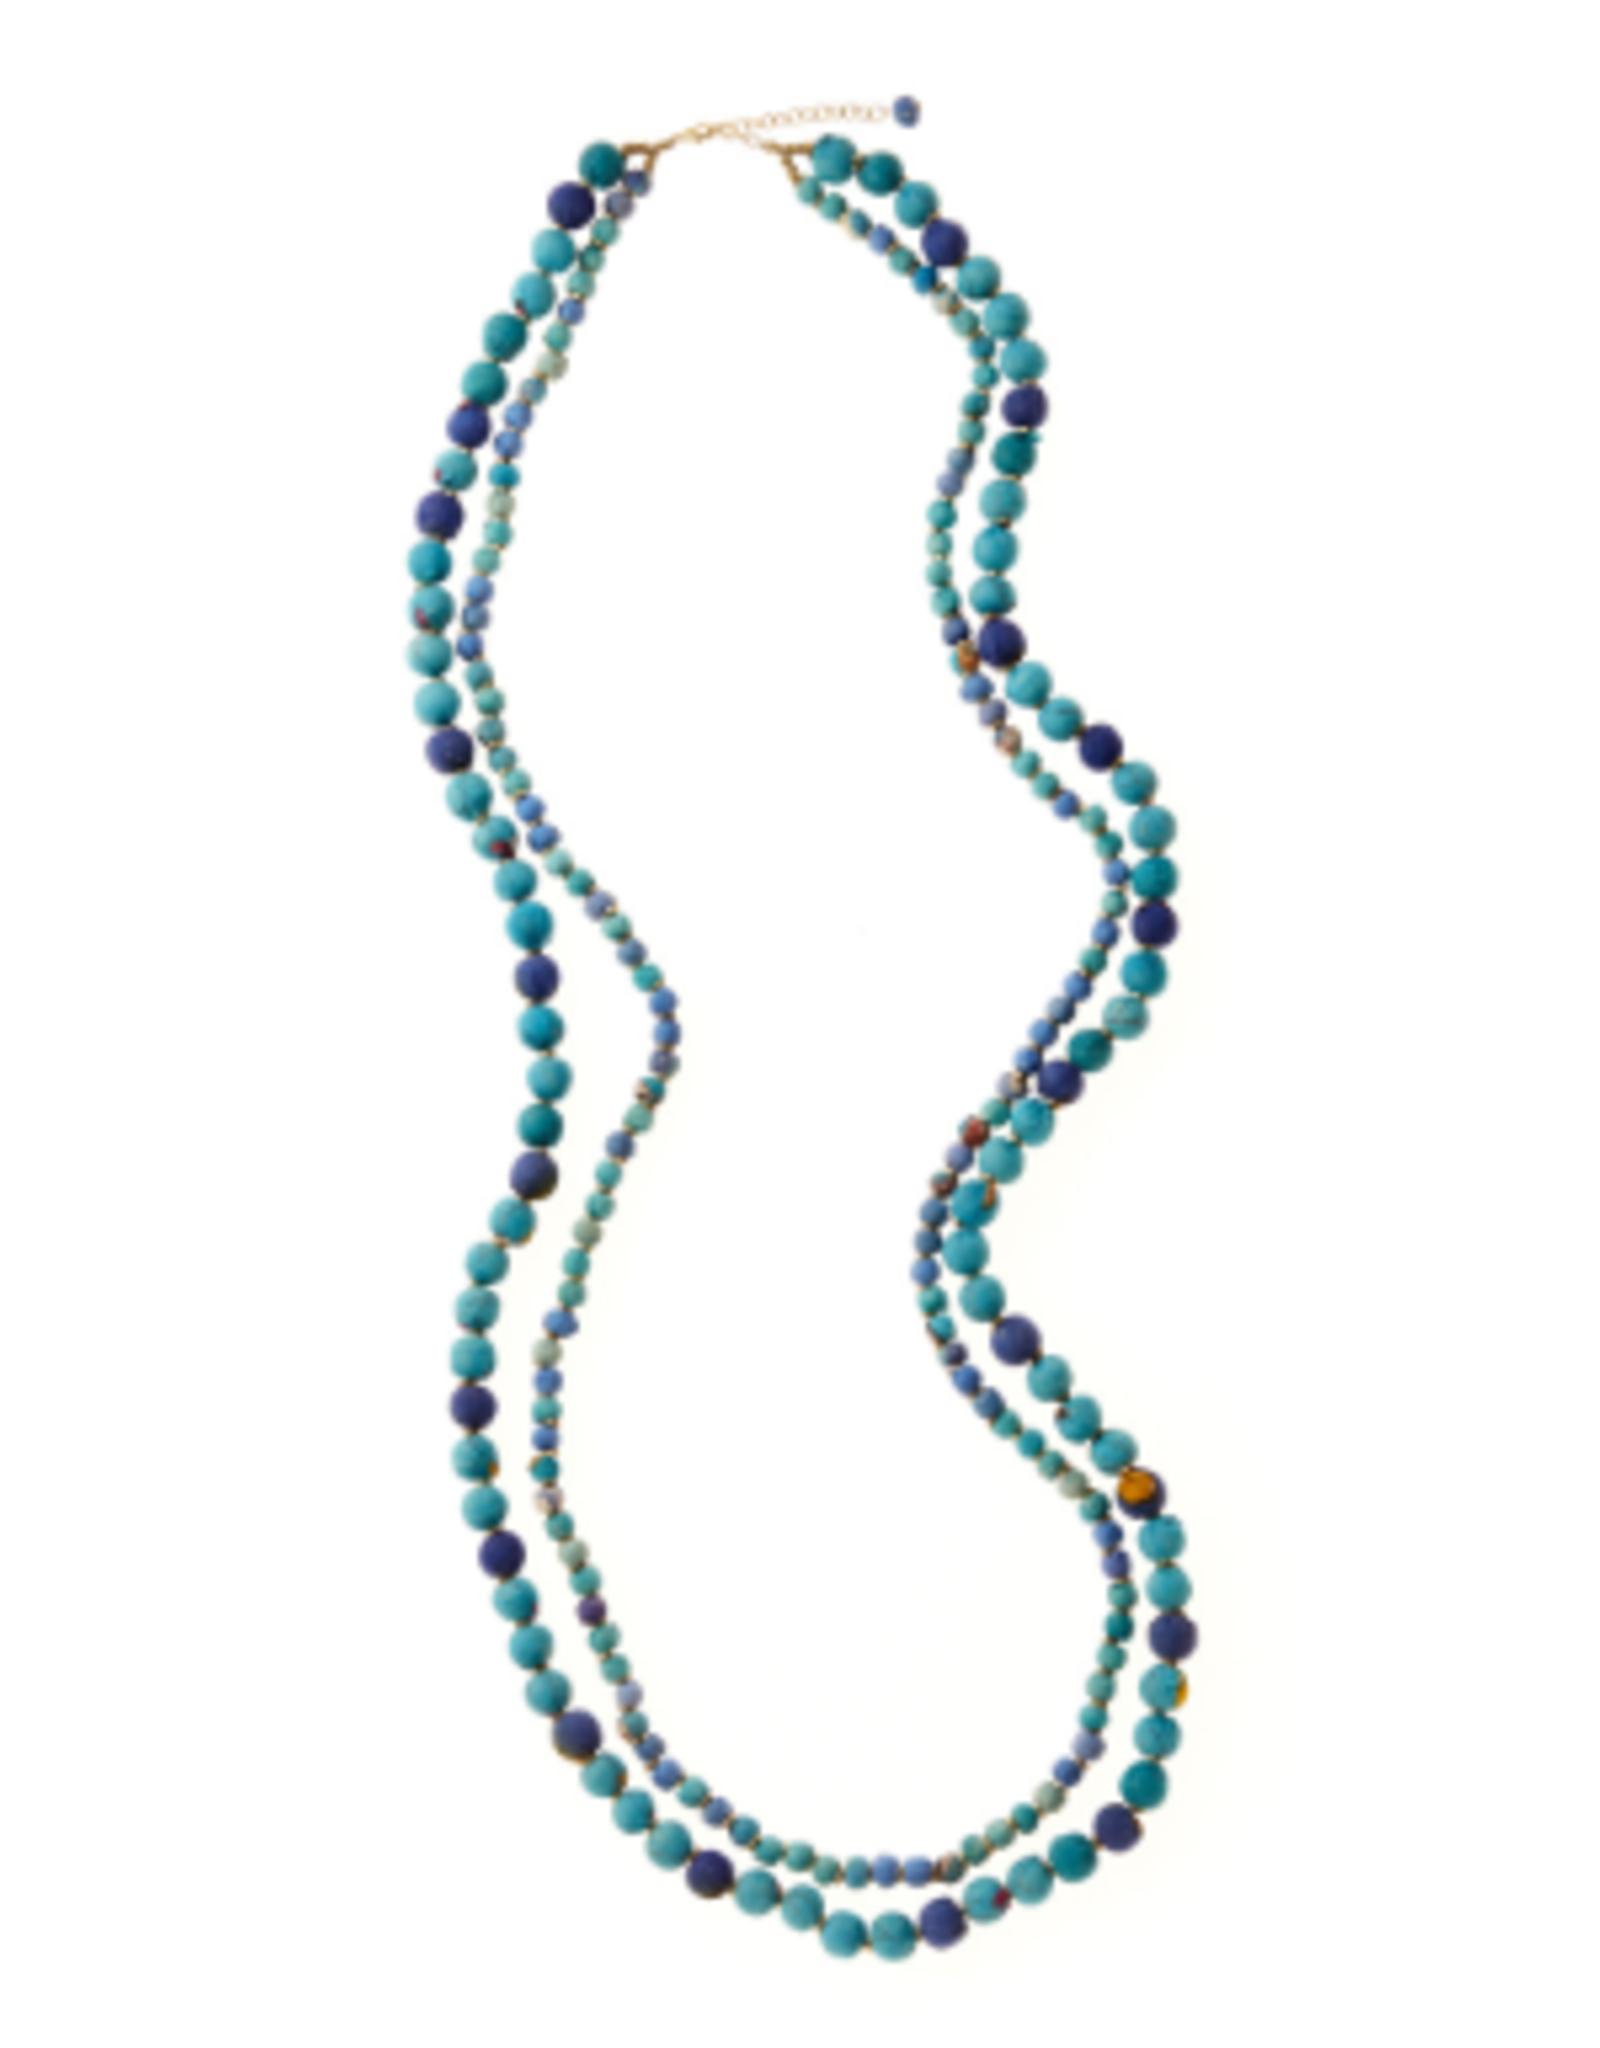 Trade roots Neela Double Strand Sari Necklace, India